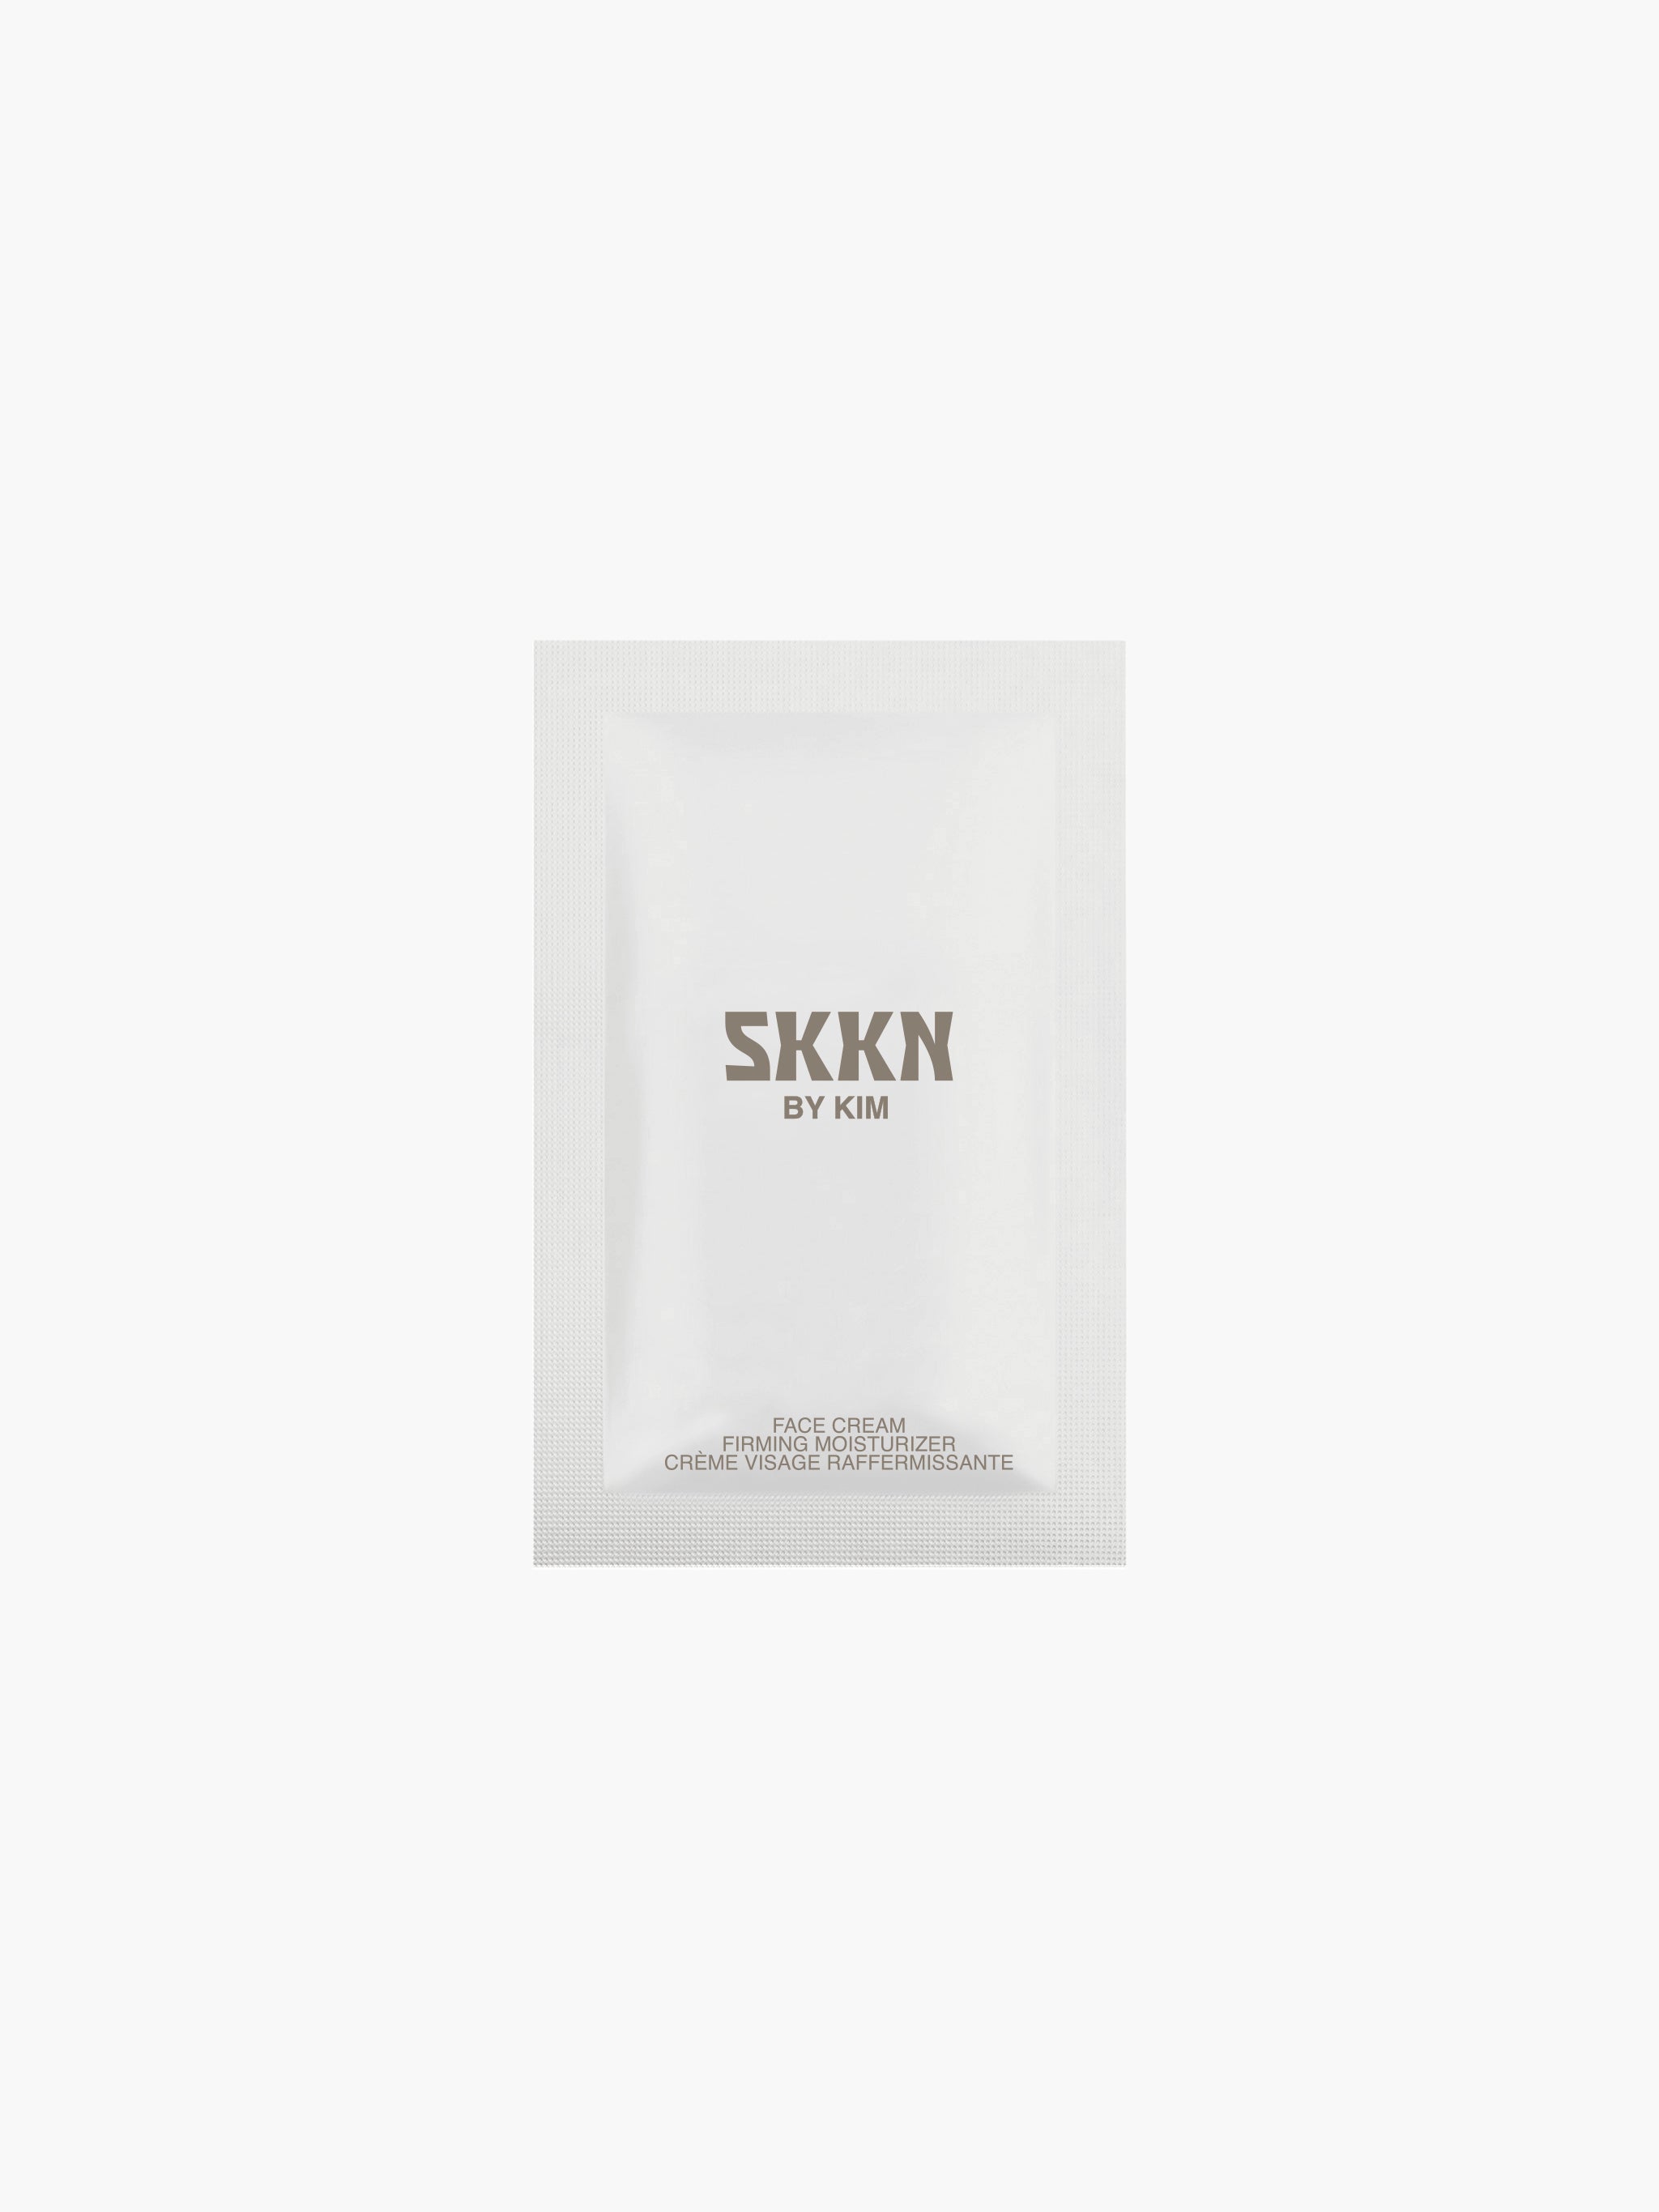 SKKN BY KIM Face Cream Sample